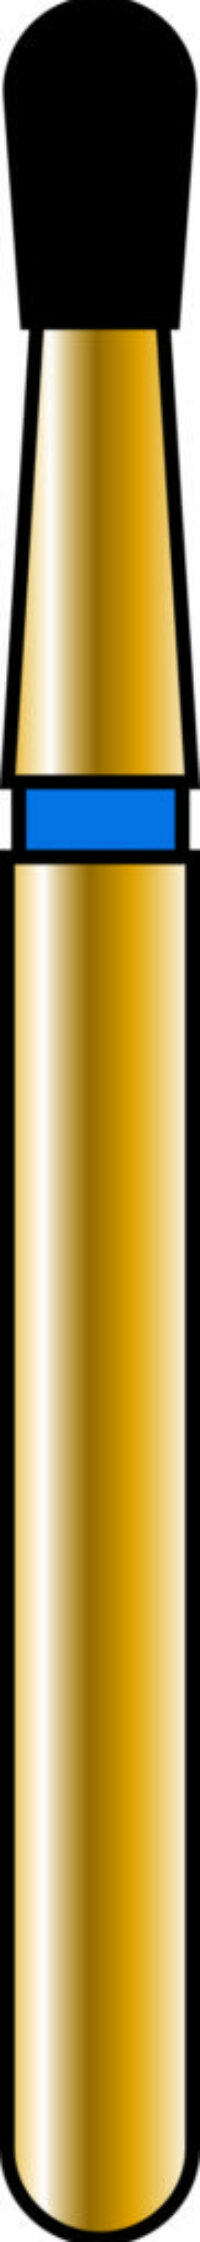 Pear 16-2.7mm Gold Diamond Bur - Coarse Grit